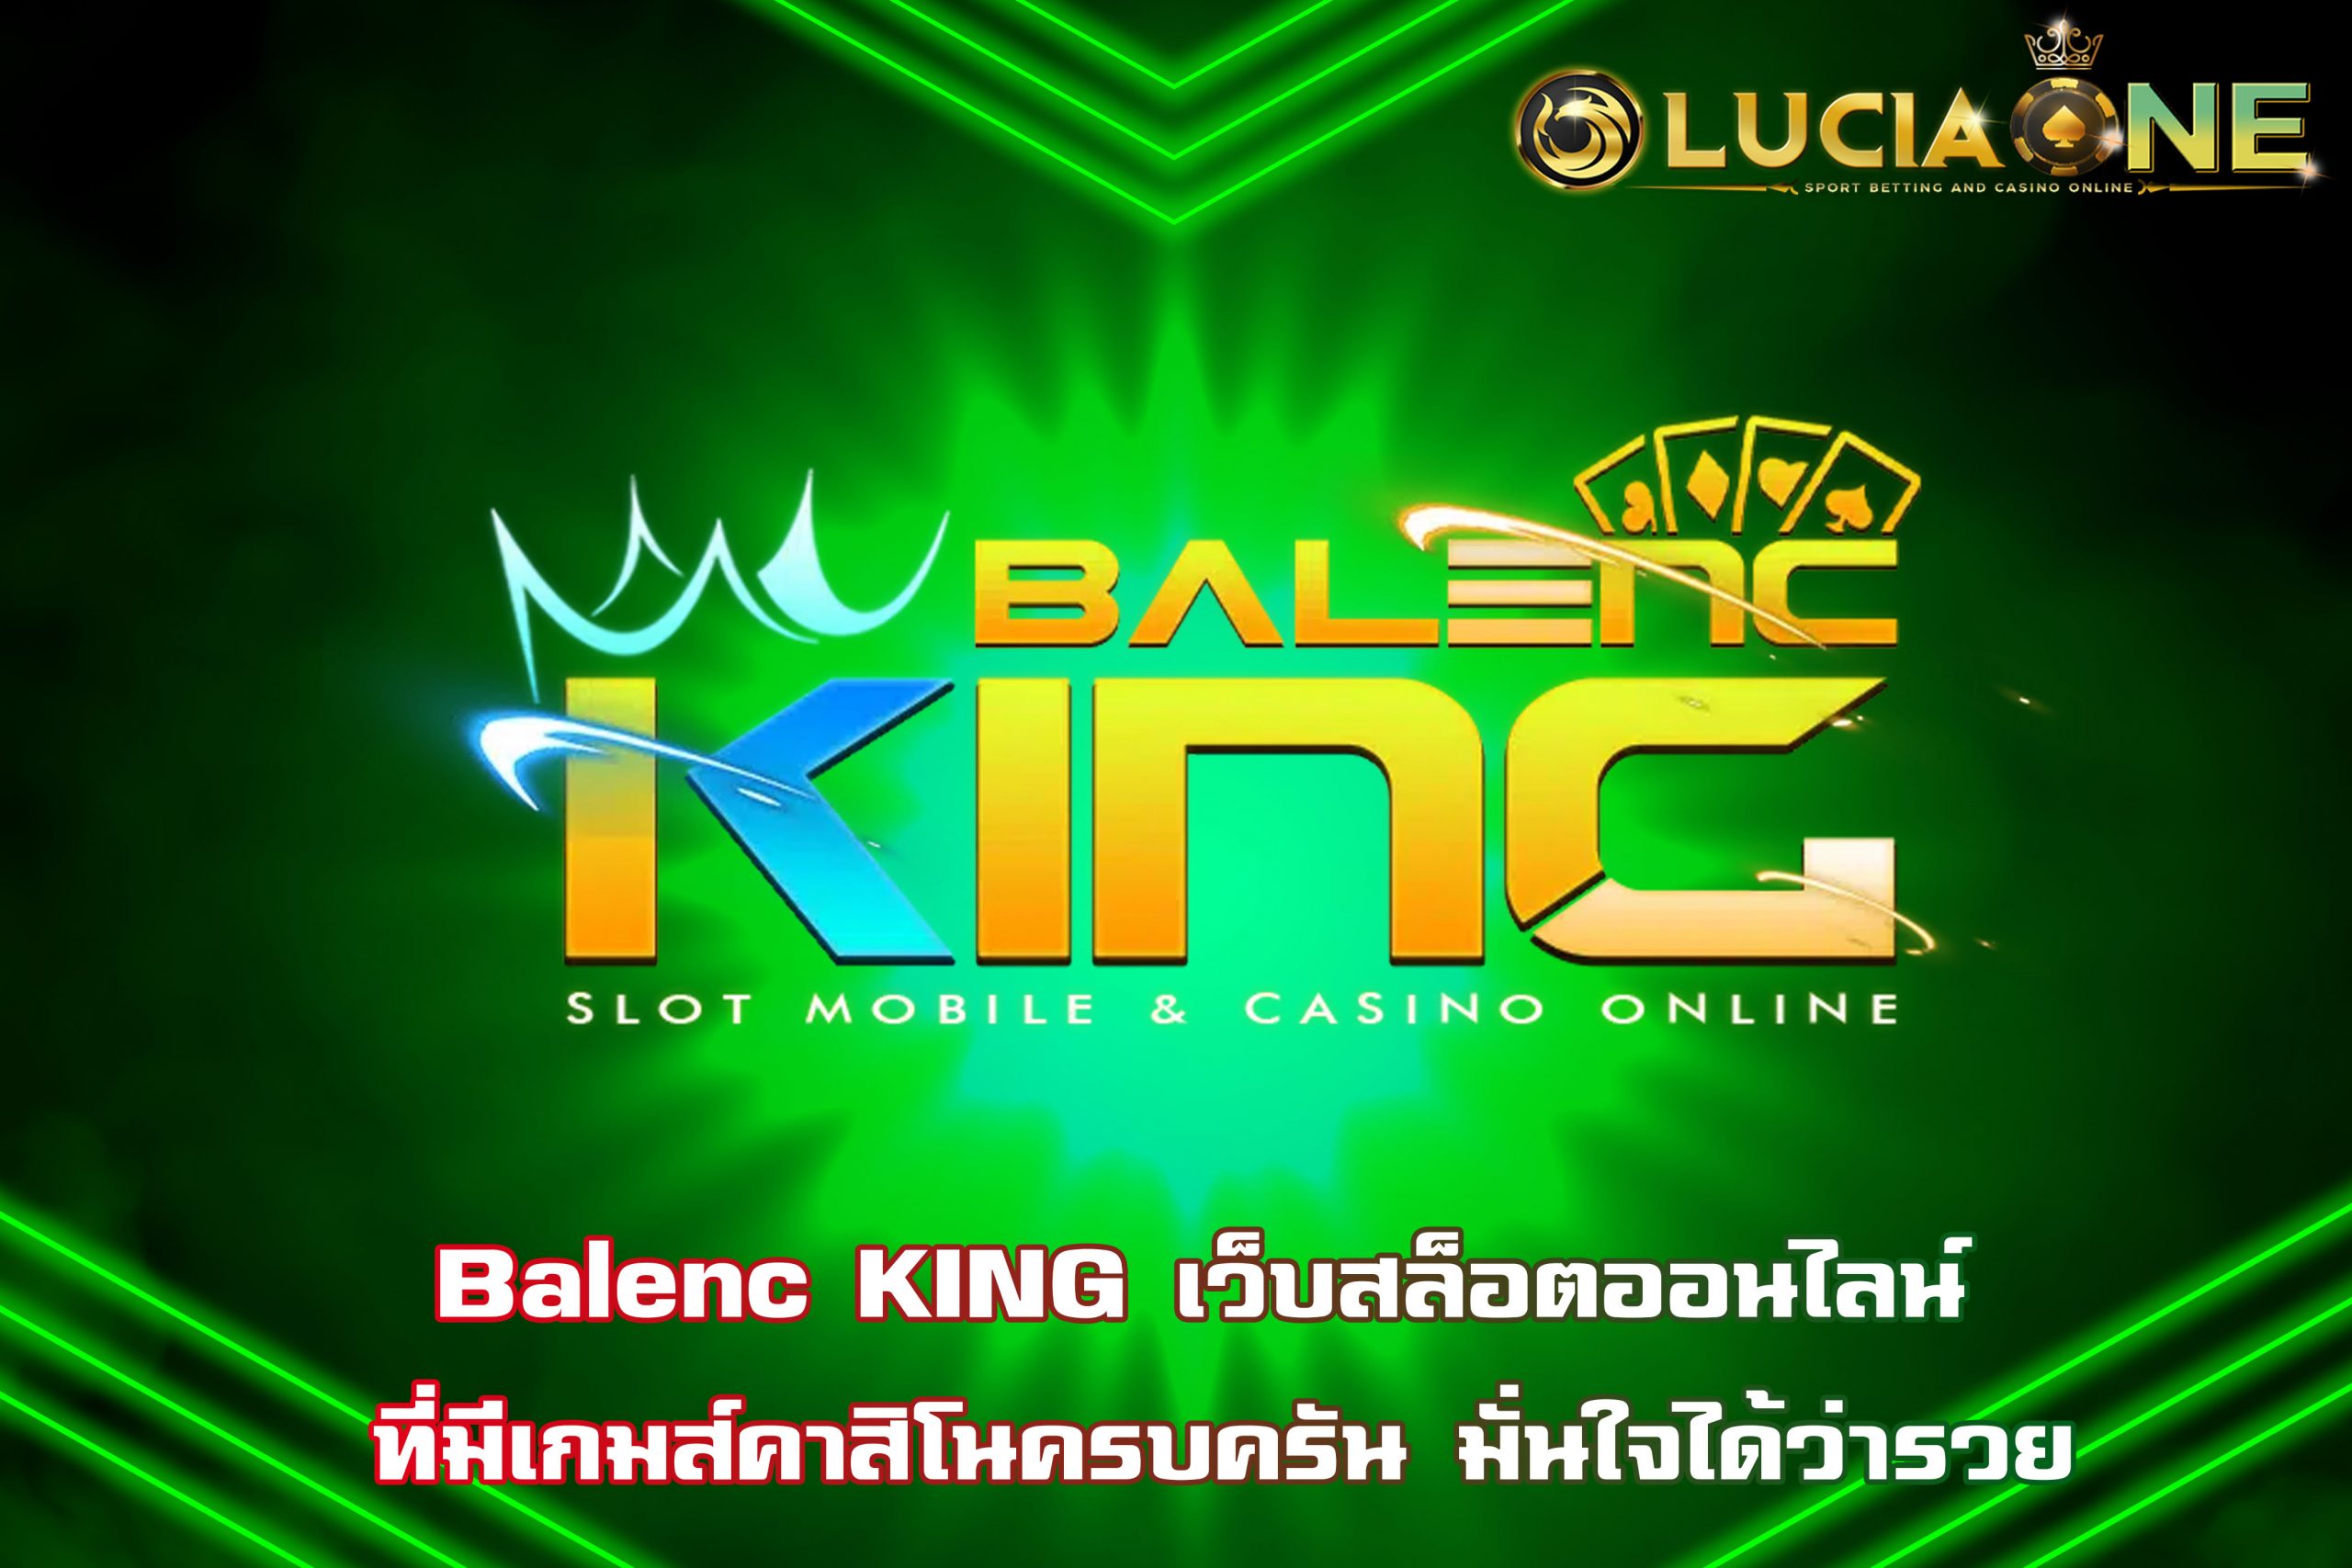 Balenc KING เว็บสล็อตออนไลน์ ที่มีเกมส์คาสิโนครบครัน มั่นใจได้ว่ารวย